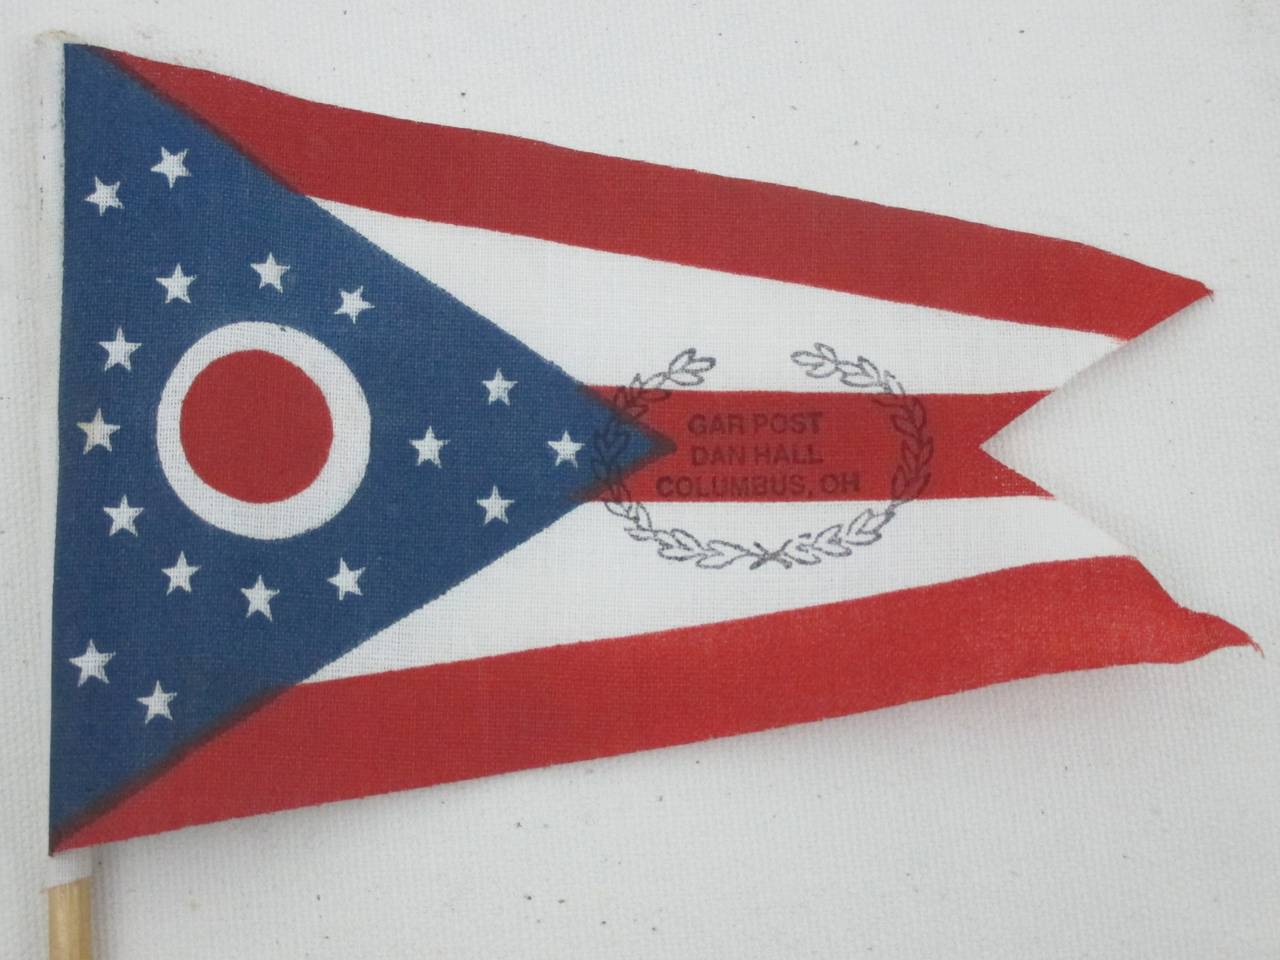 Ohio Parade Flag with GAR Overprinting 1